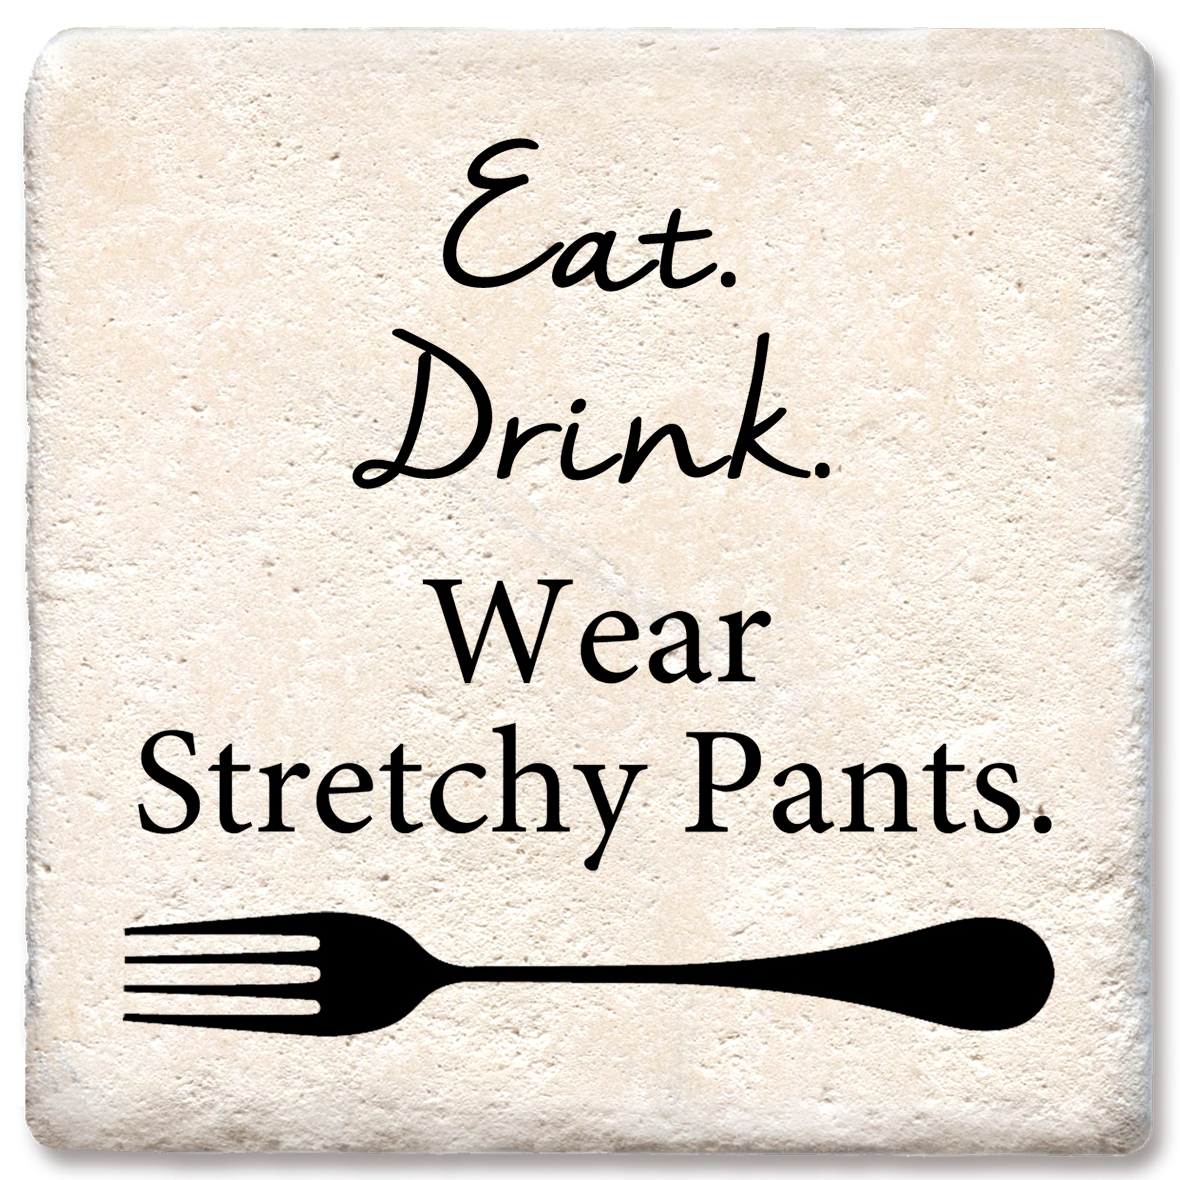 Eat Drink Wear Stretchy Pants, Coaster - Danshire Market and Design 